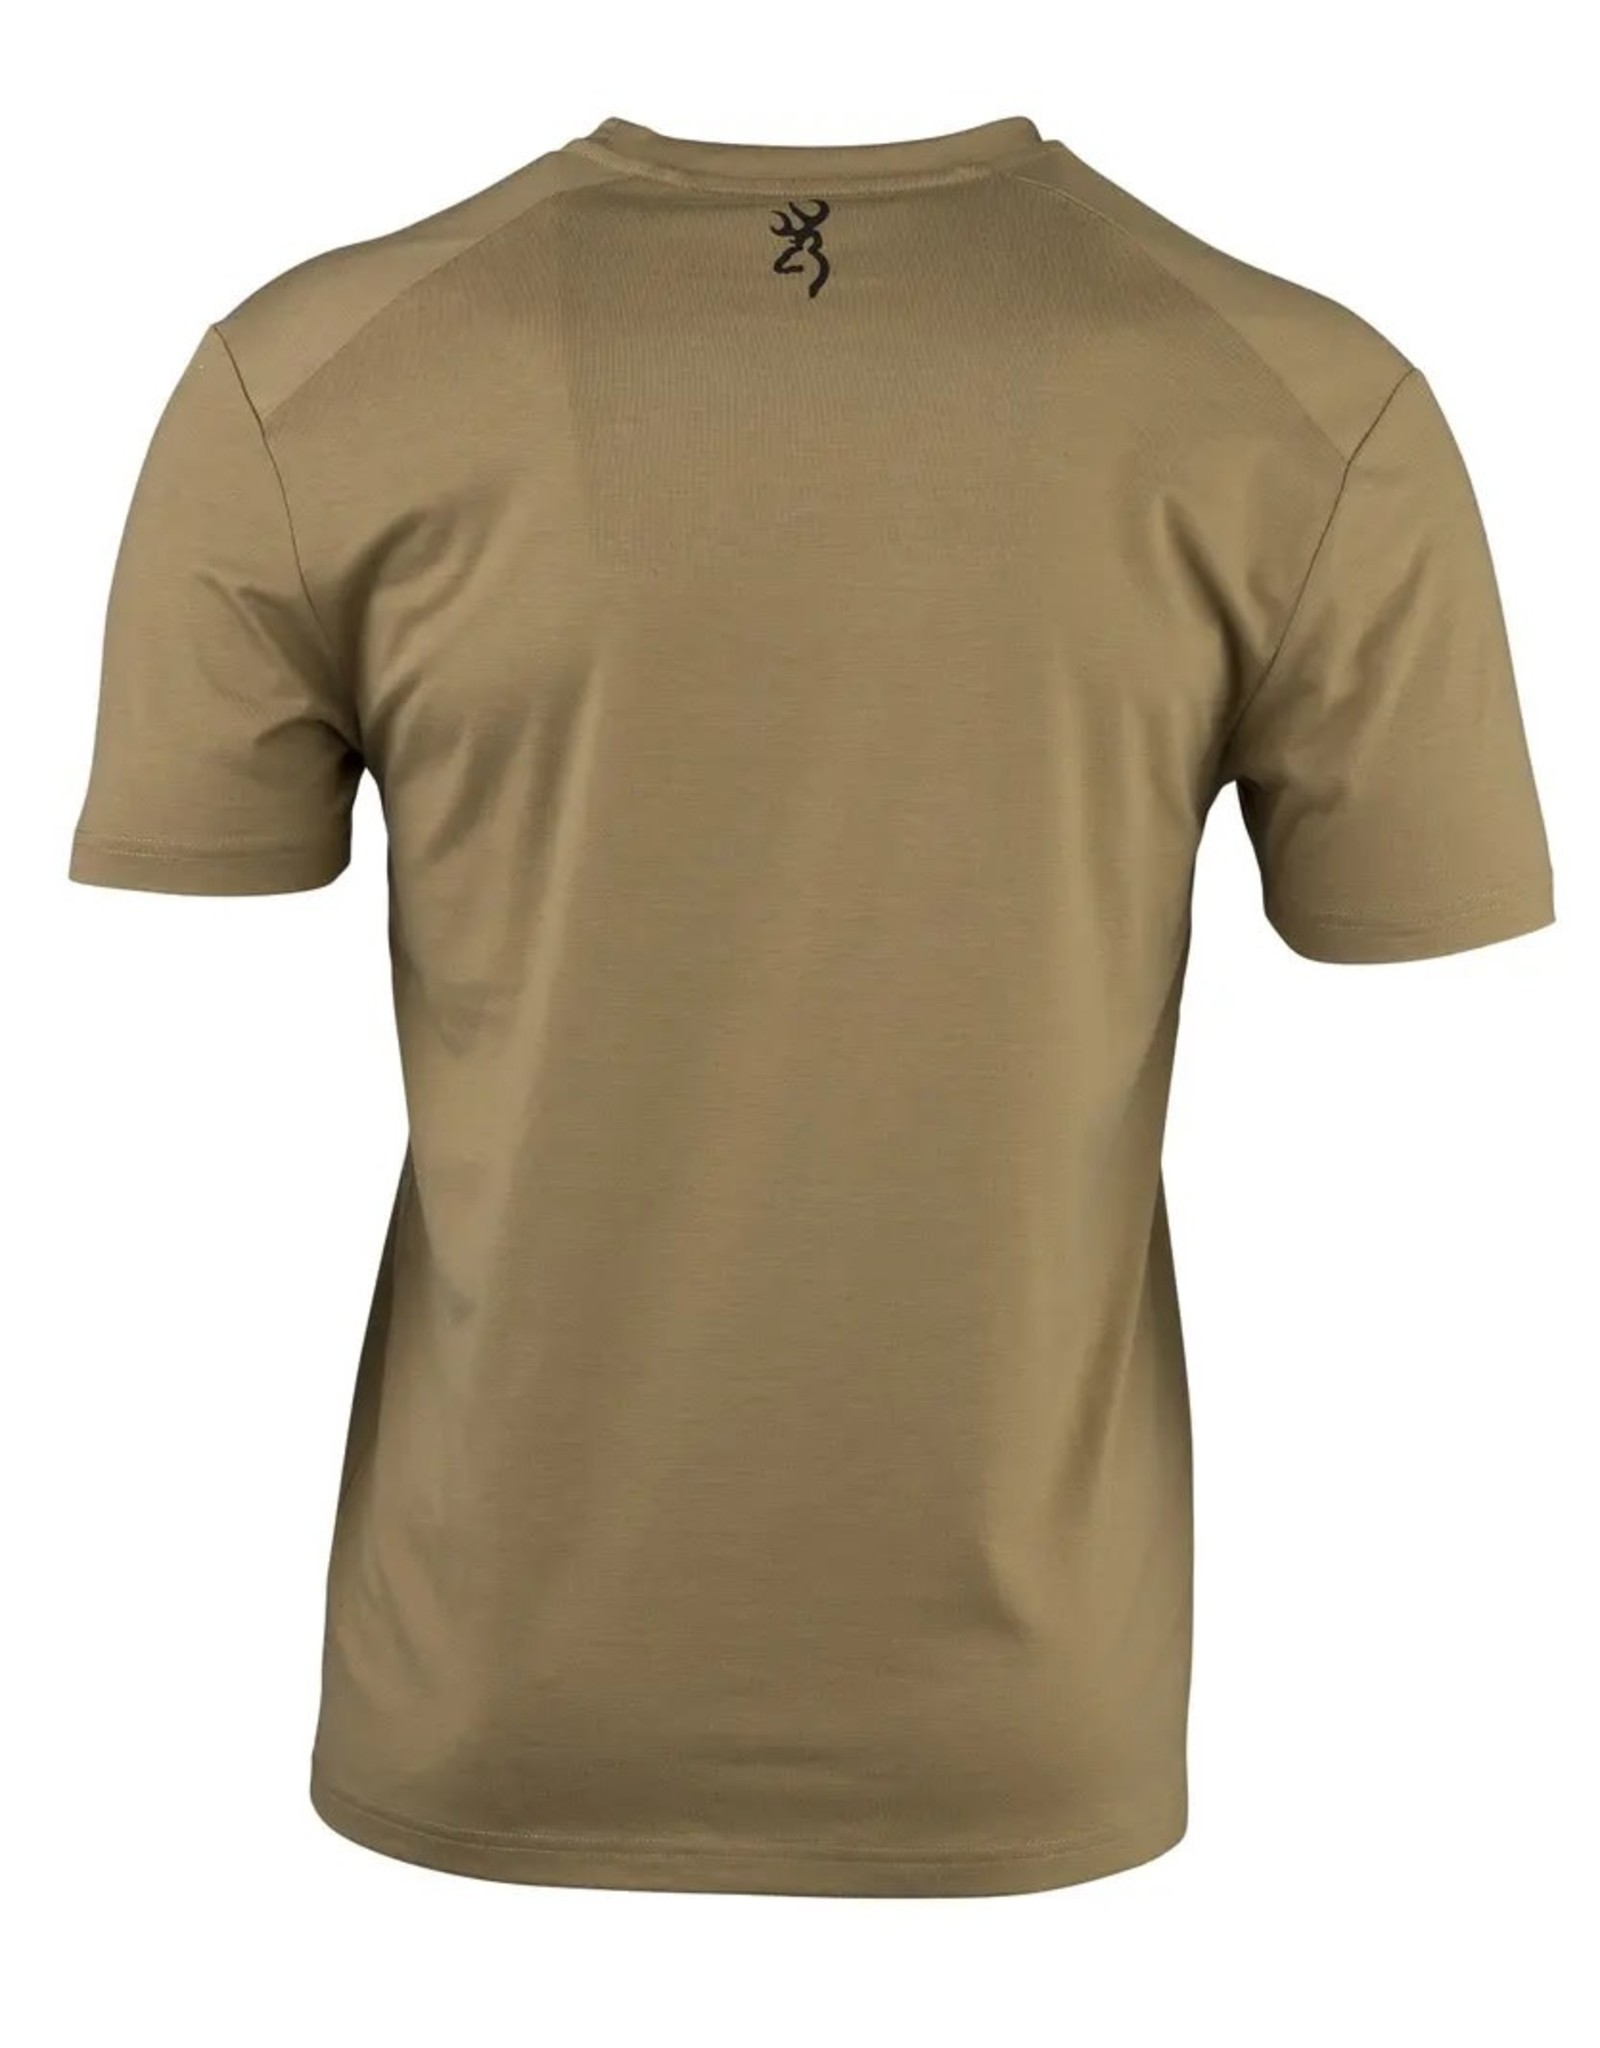 Browning Camp T-Shirt - Mule Deer - Tan - Large